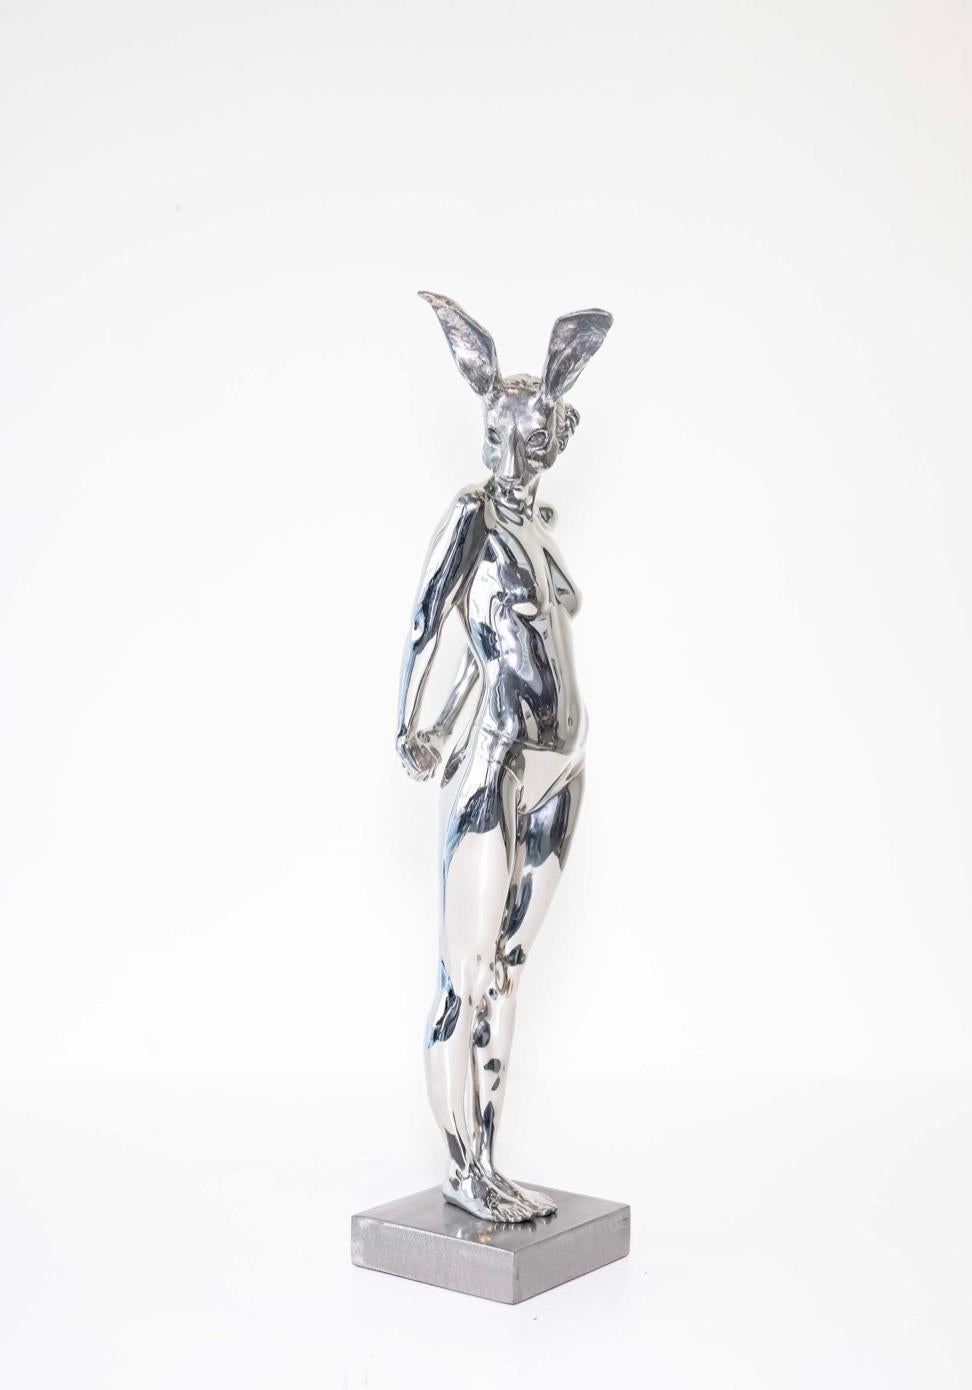 Rachel Ann Stevenson Figurative Sculpture - "Stainless Steel Vigils Echo" Contemporary Nude Sculpture of a Woman 